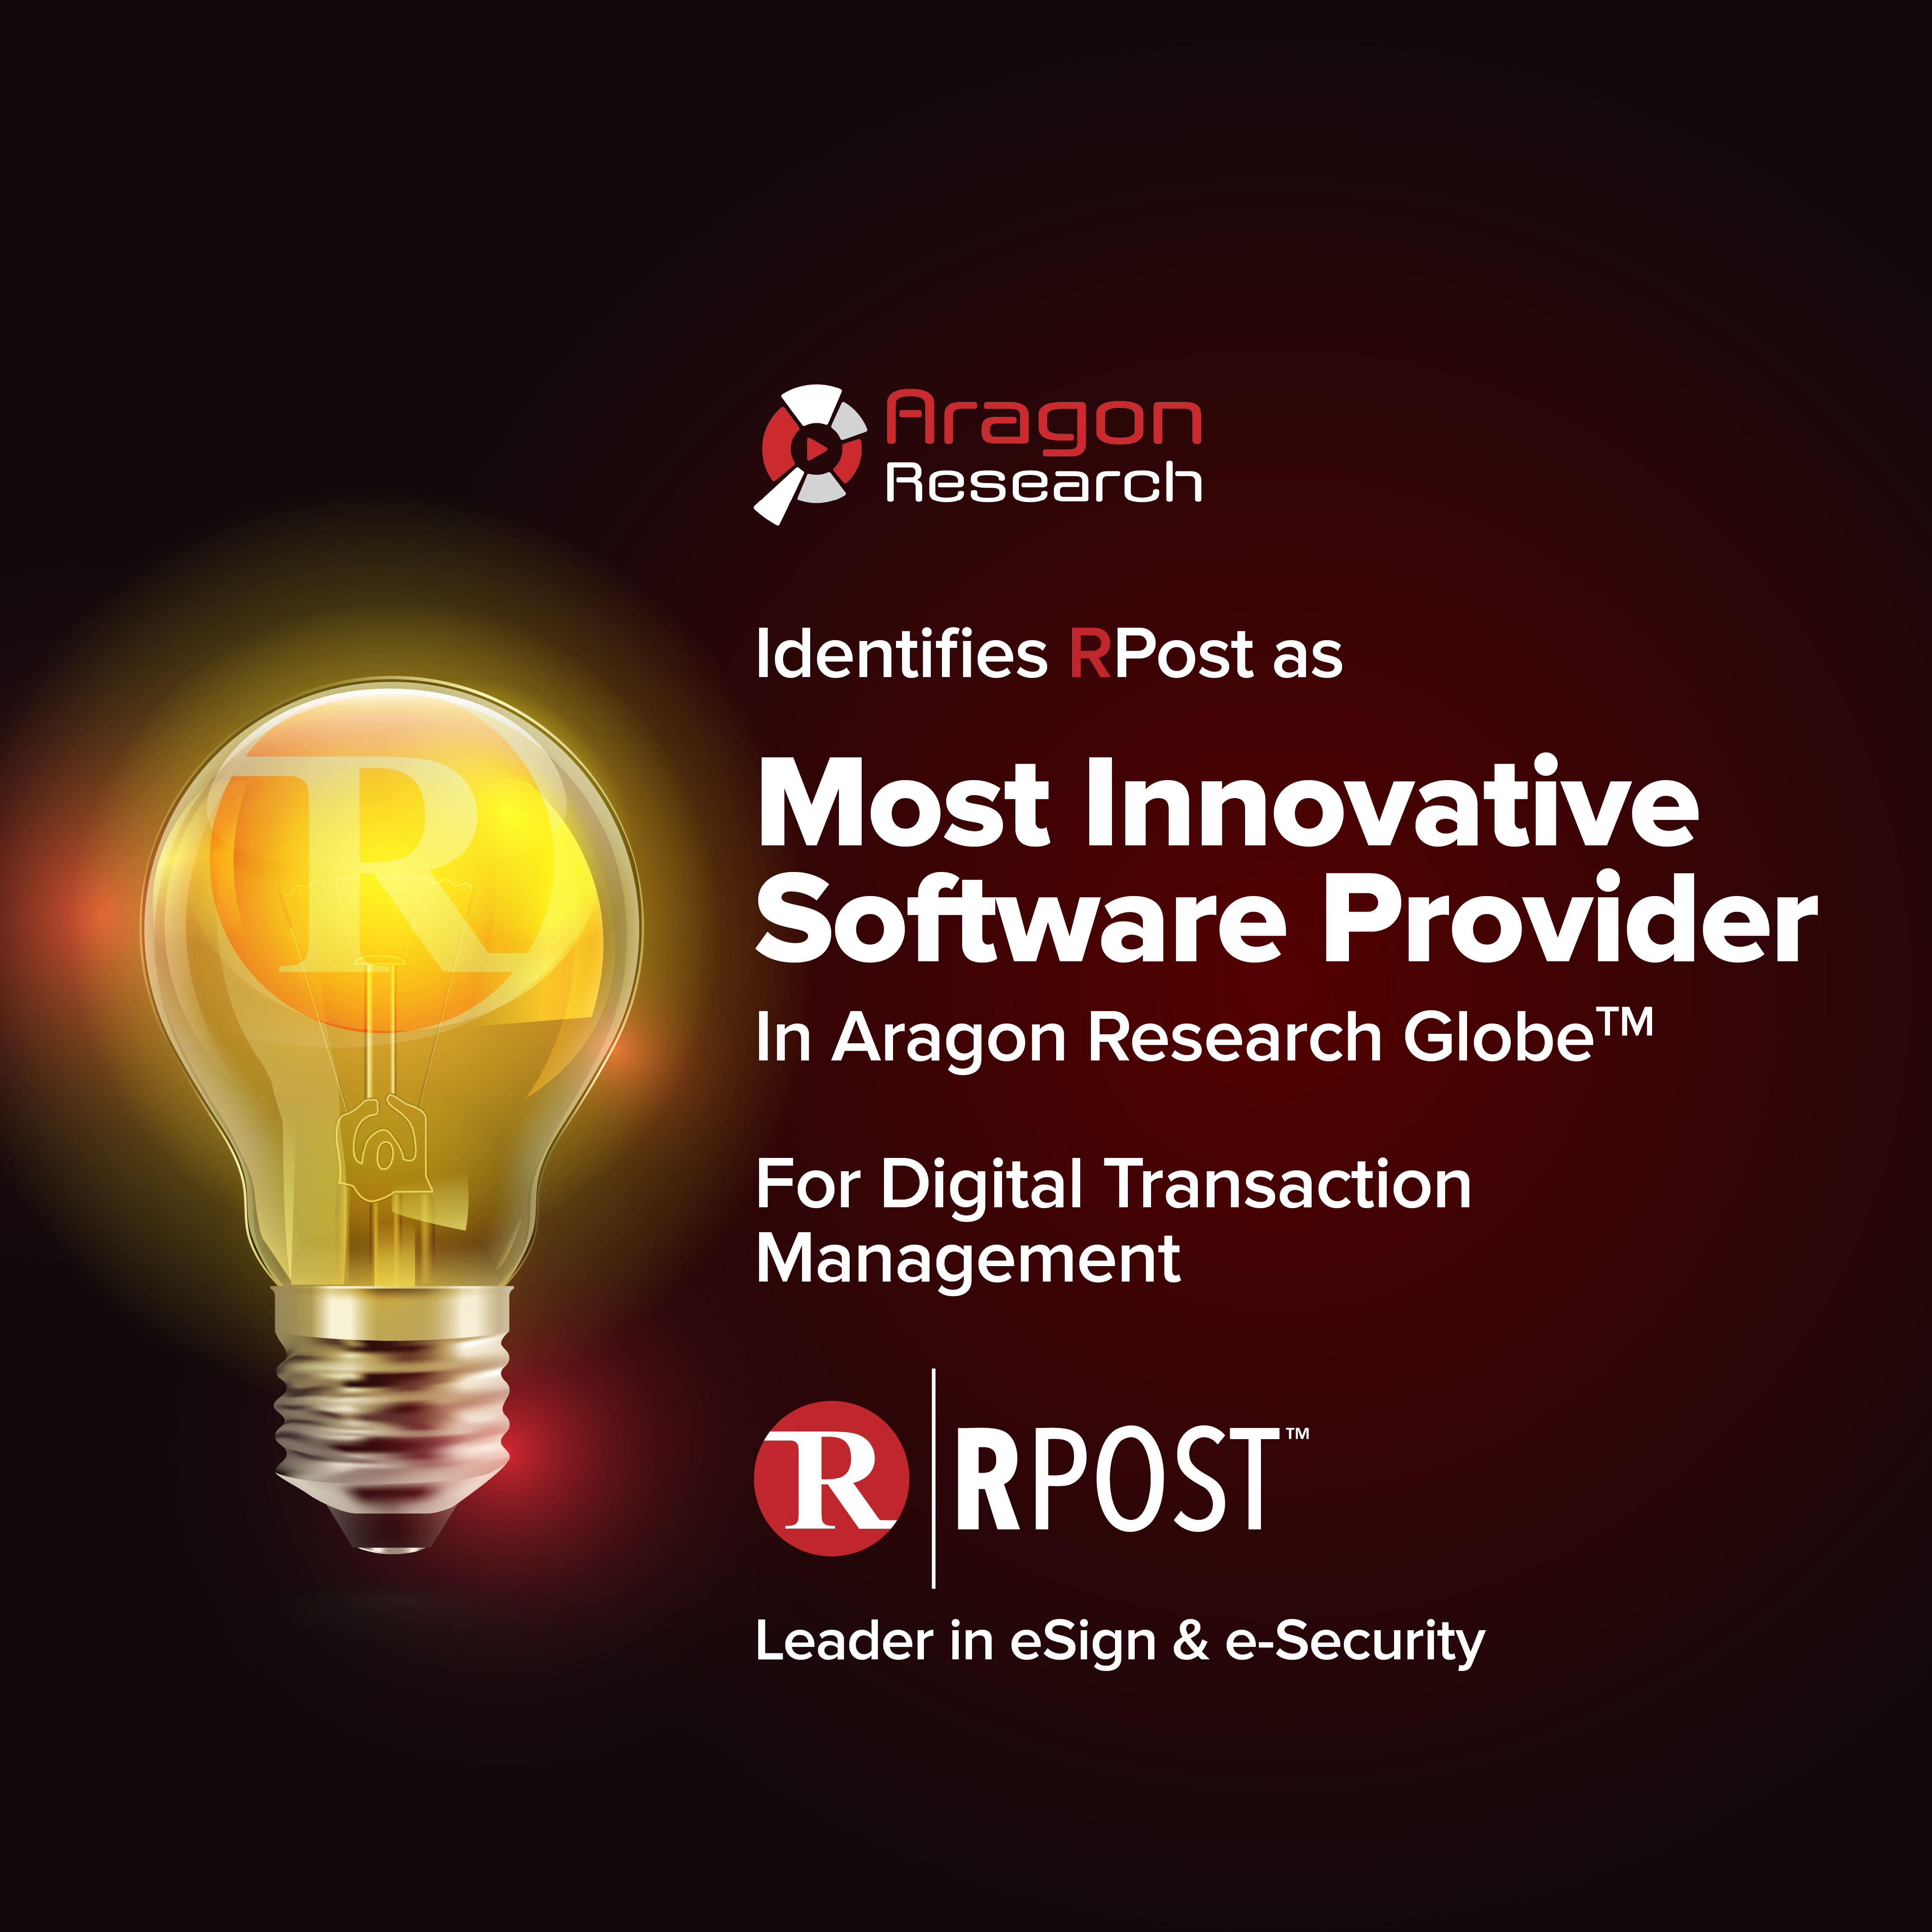 Most Innovative Software in Digital Transaction Management